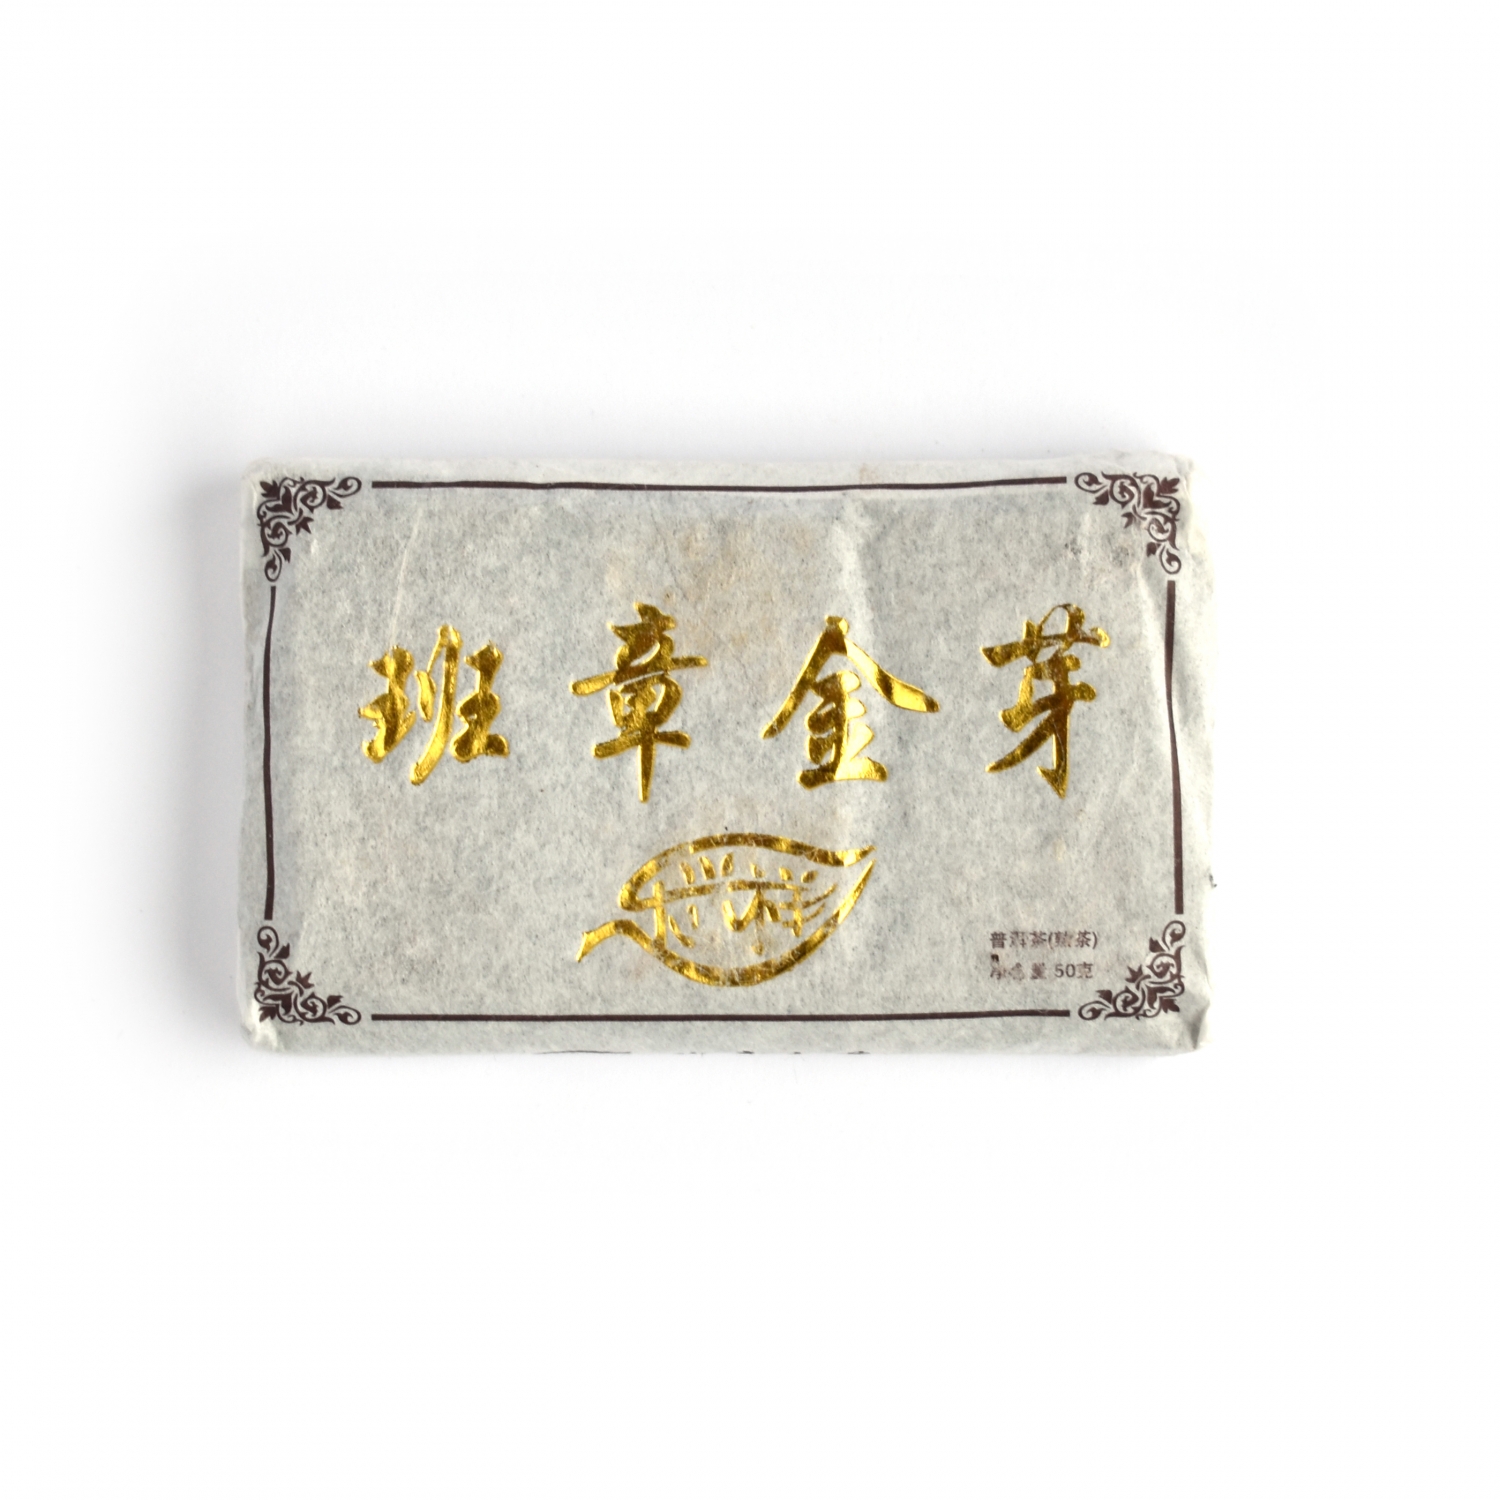 Puerh Banzhang Golden Bud (ripe)